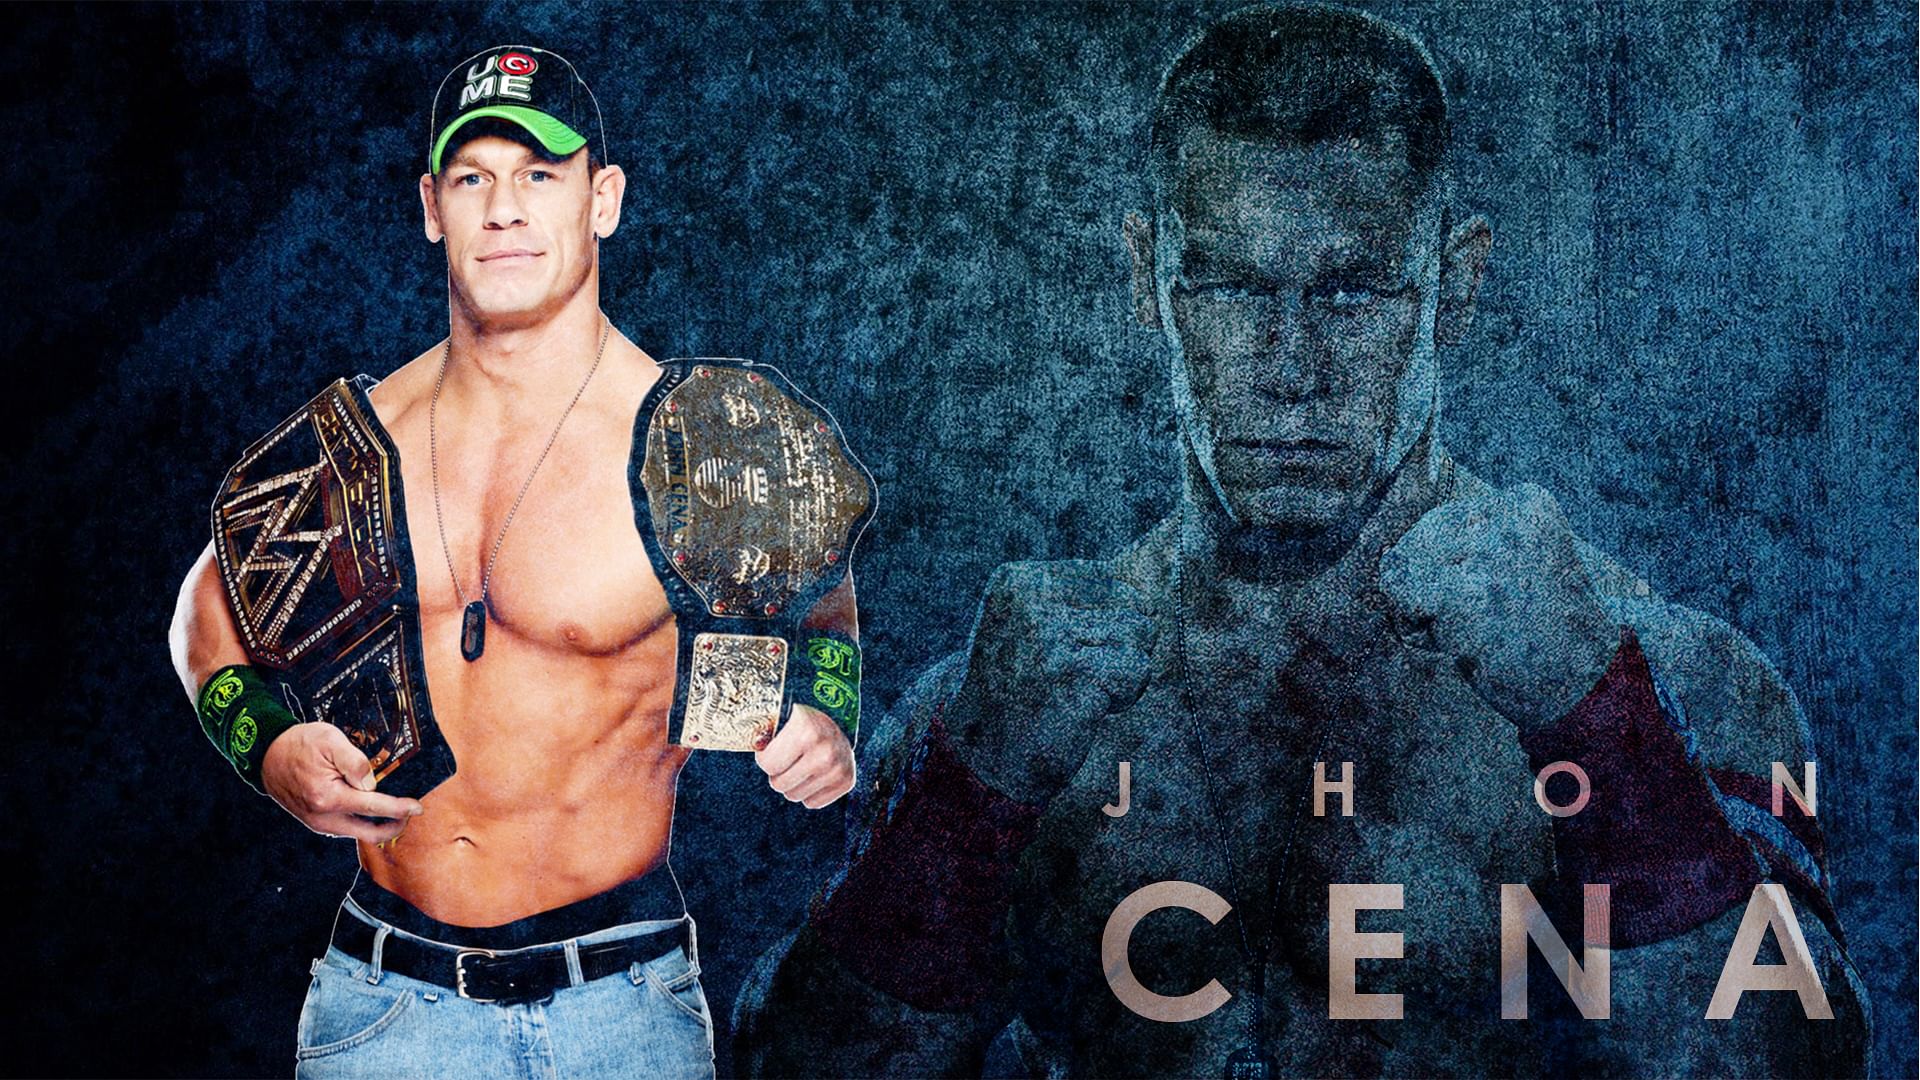 John Cena Wallpaper: 10 must downloads